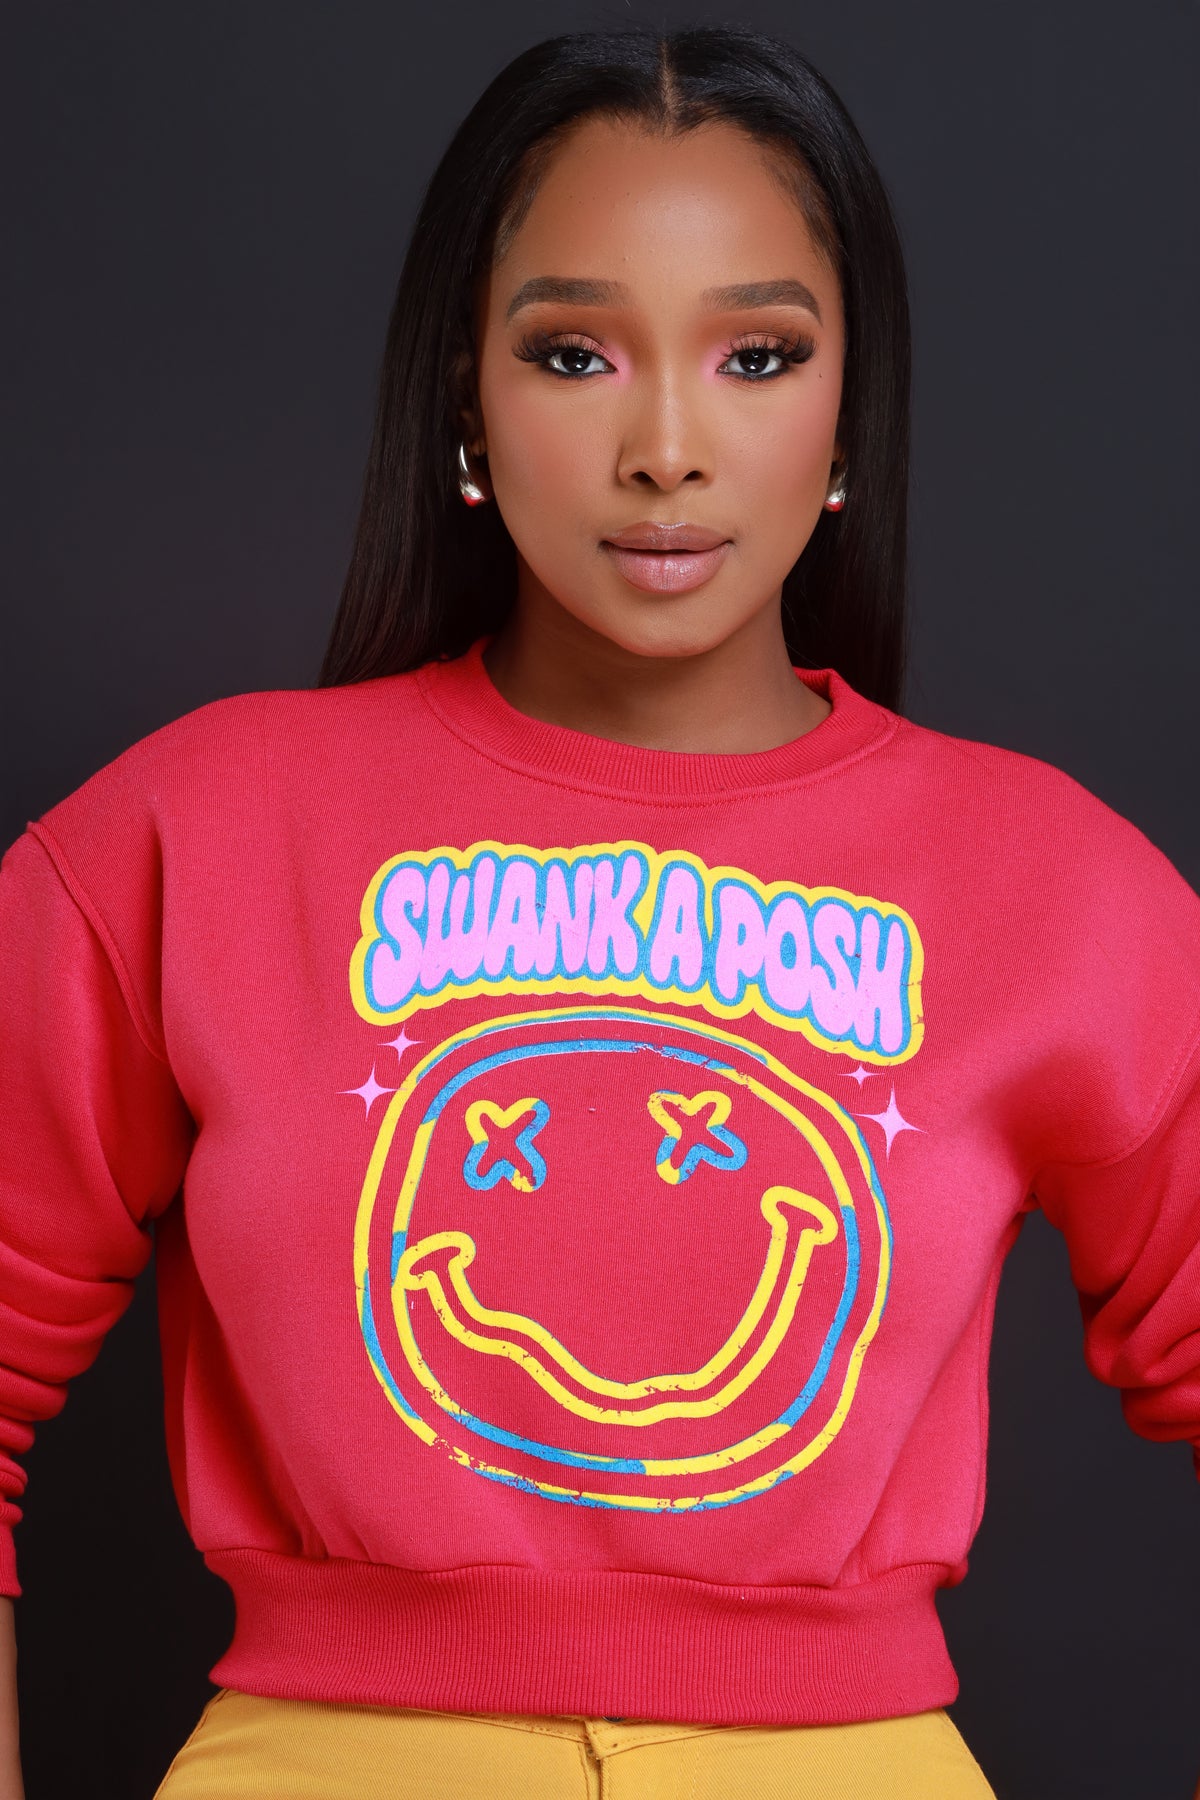 
              Smile Back Logo Graphic Sweatshirt - Fuchsia - Swank A Posh
            